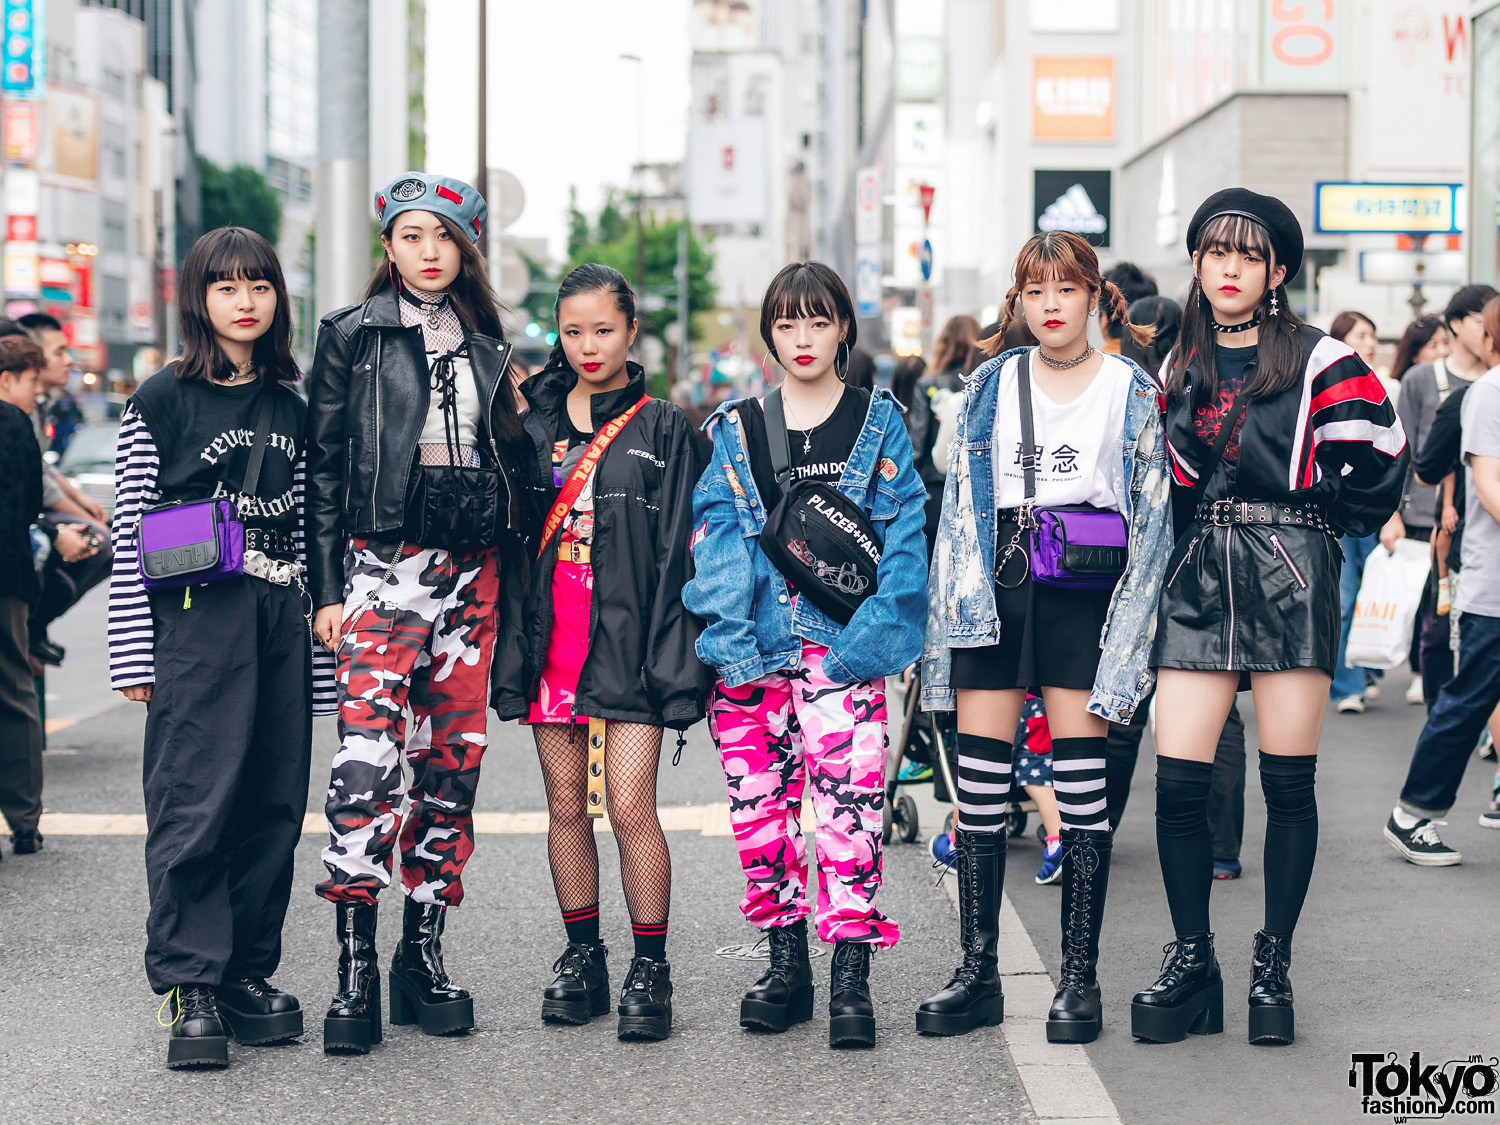 Harajuku Teen Girl Squad in Modern Japanese Streetwear Styles Tokyo